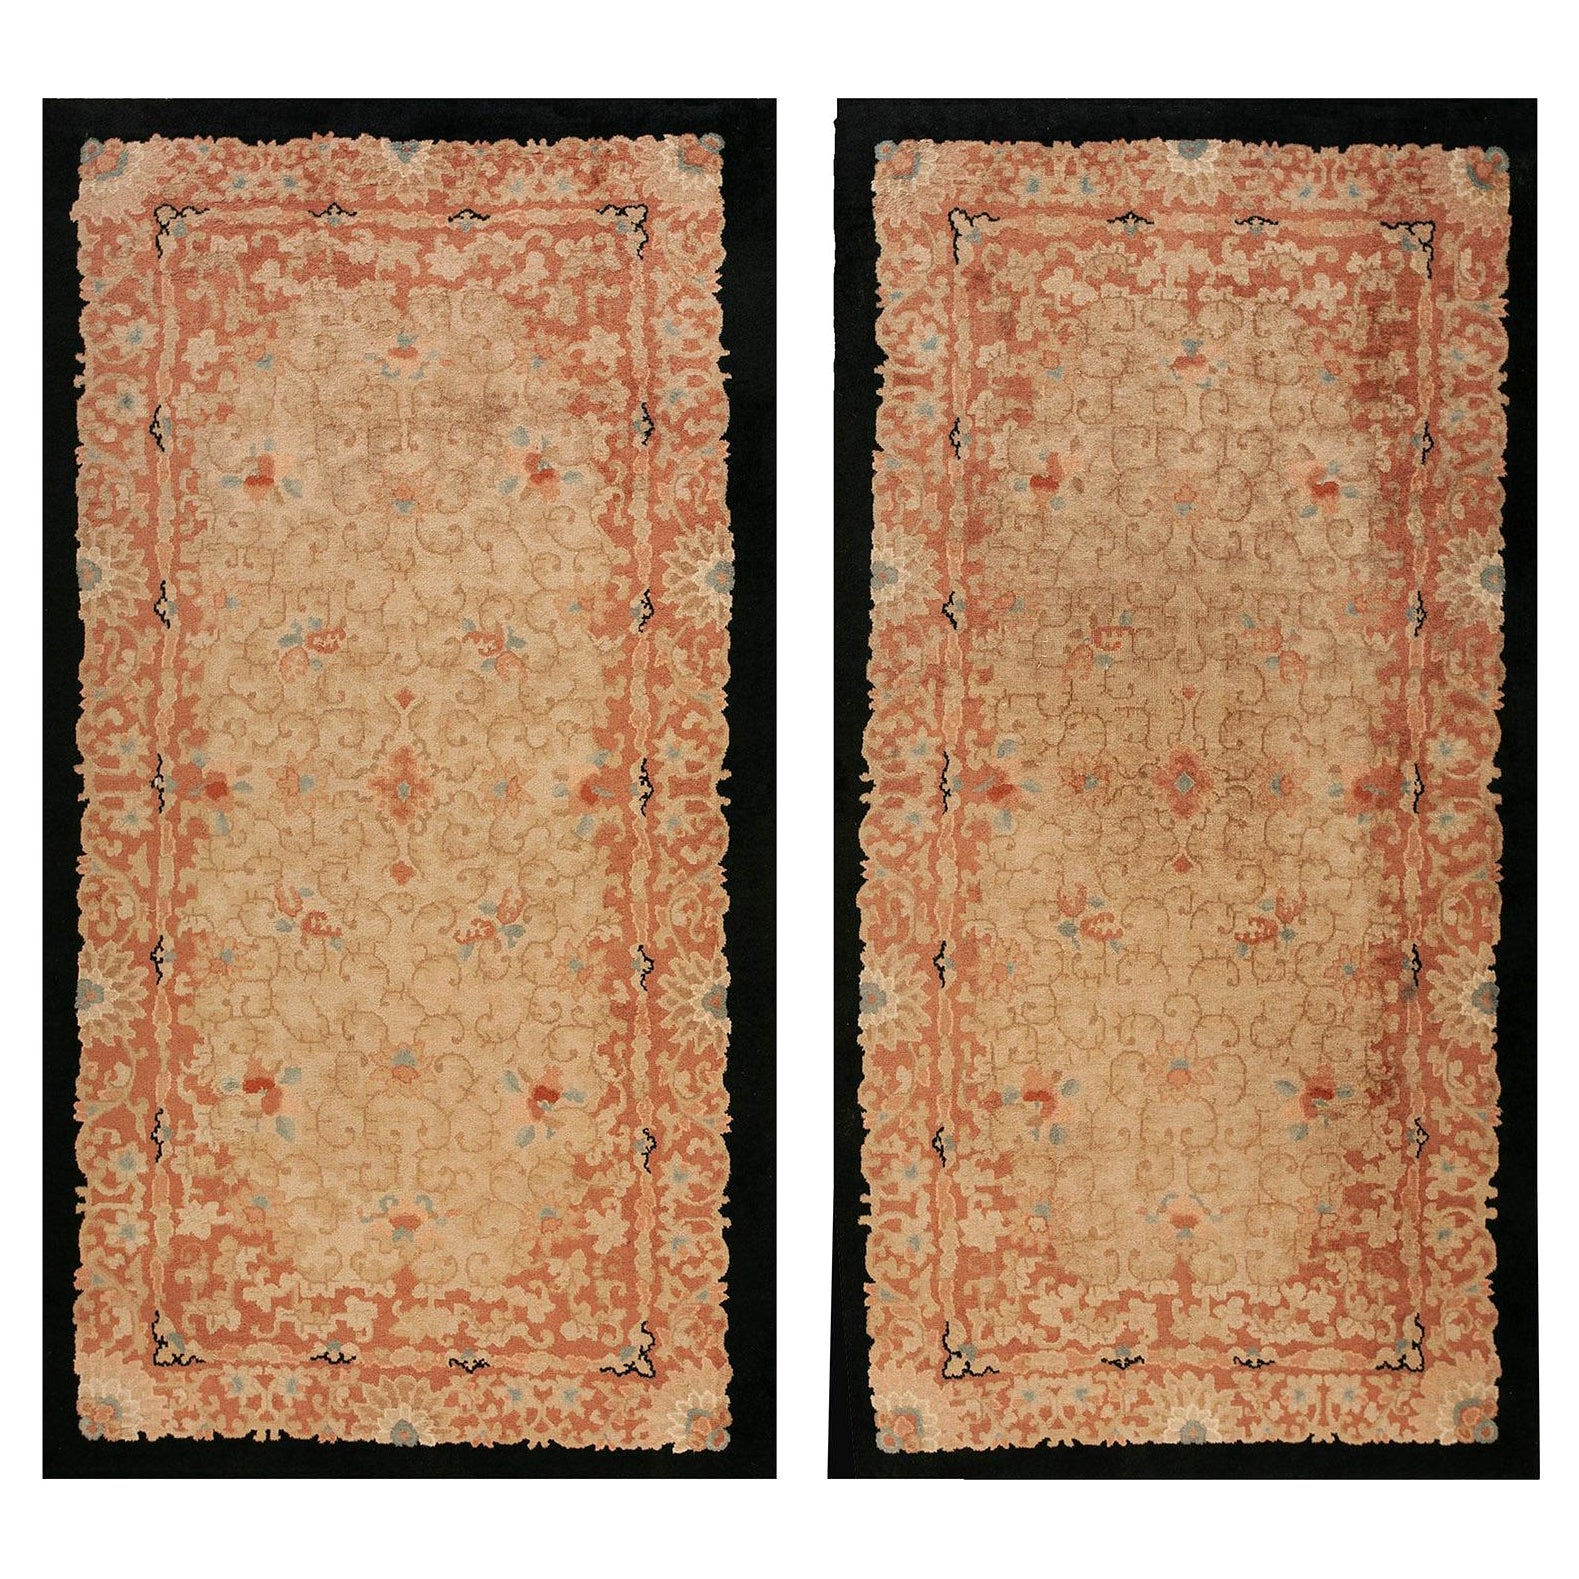 1920s Pair of Chinese Art Deco Carpets by Fette-Li Workshop (4'x7'10"-122x238)